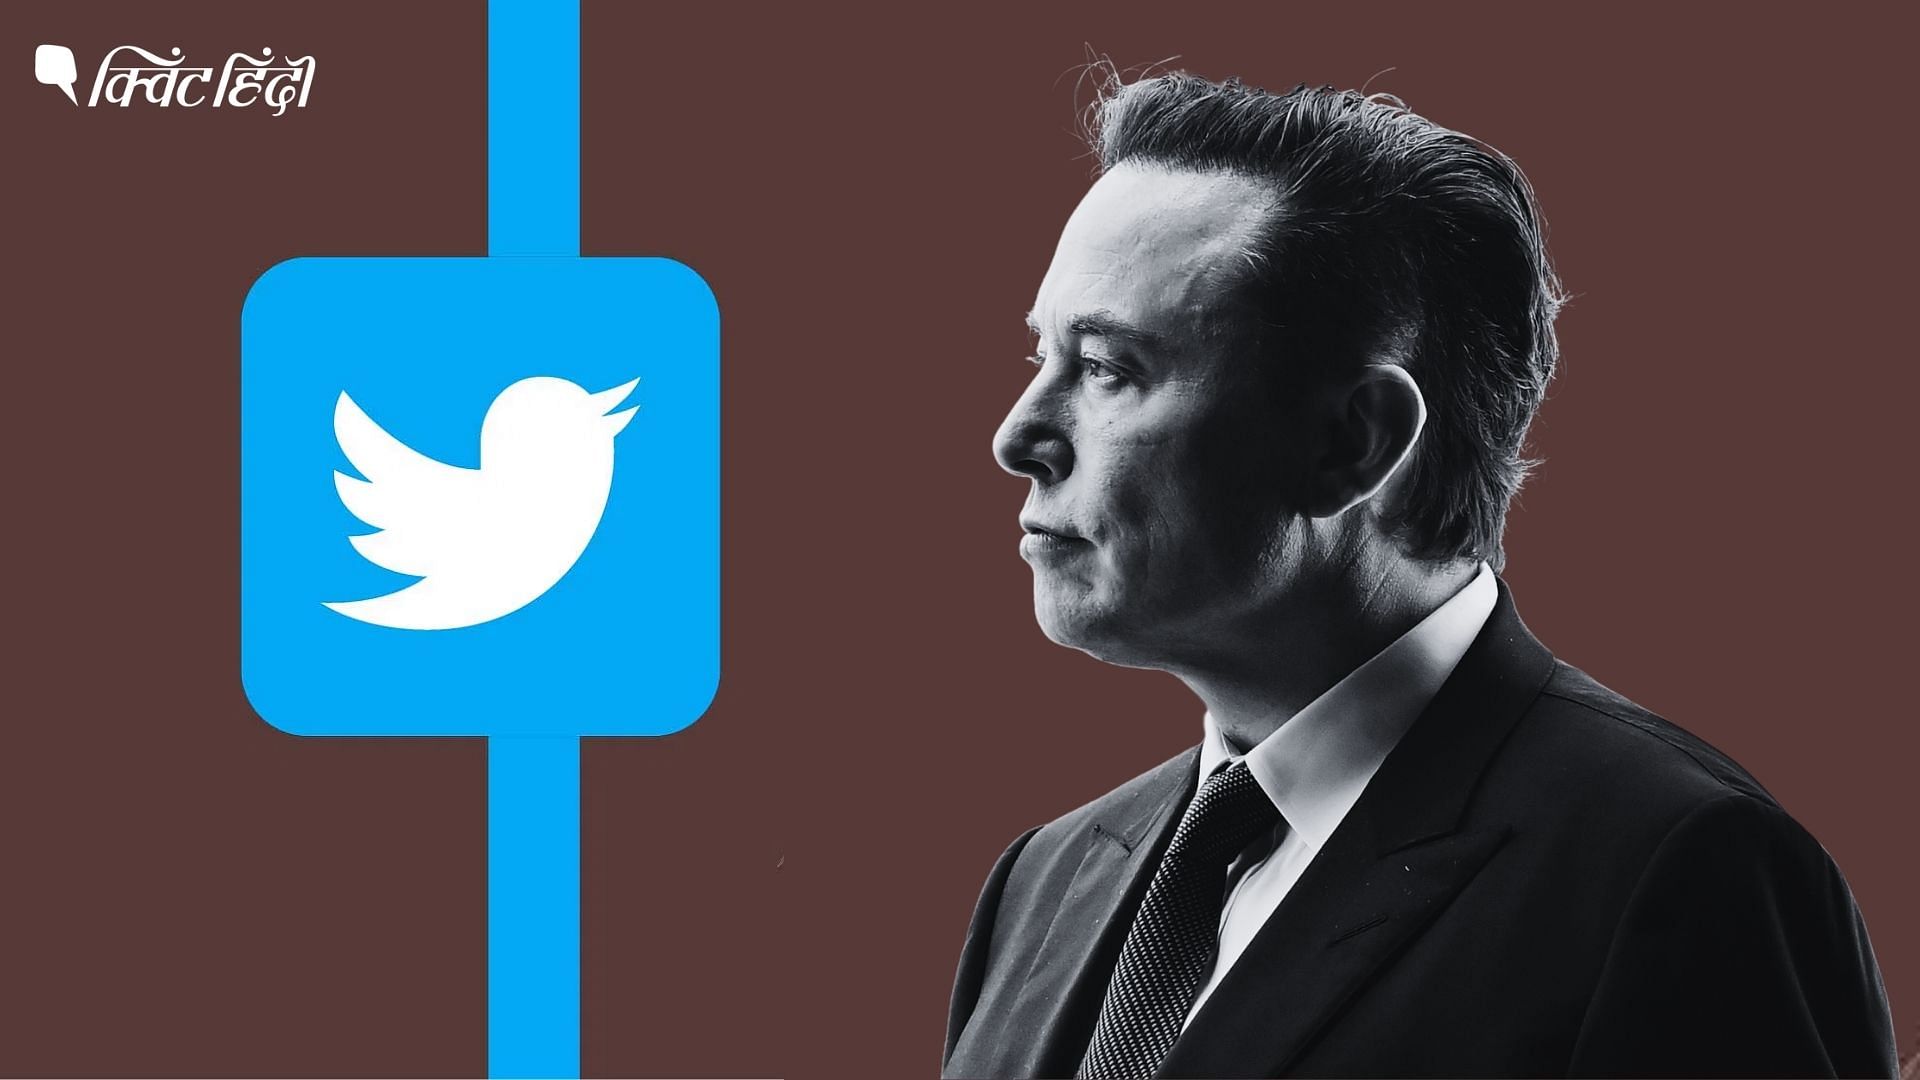 <div class="paragraphs"><p>Elon Musk Twitter के मालिक बन गए हैं</p></div>